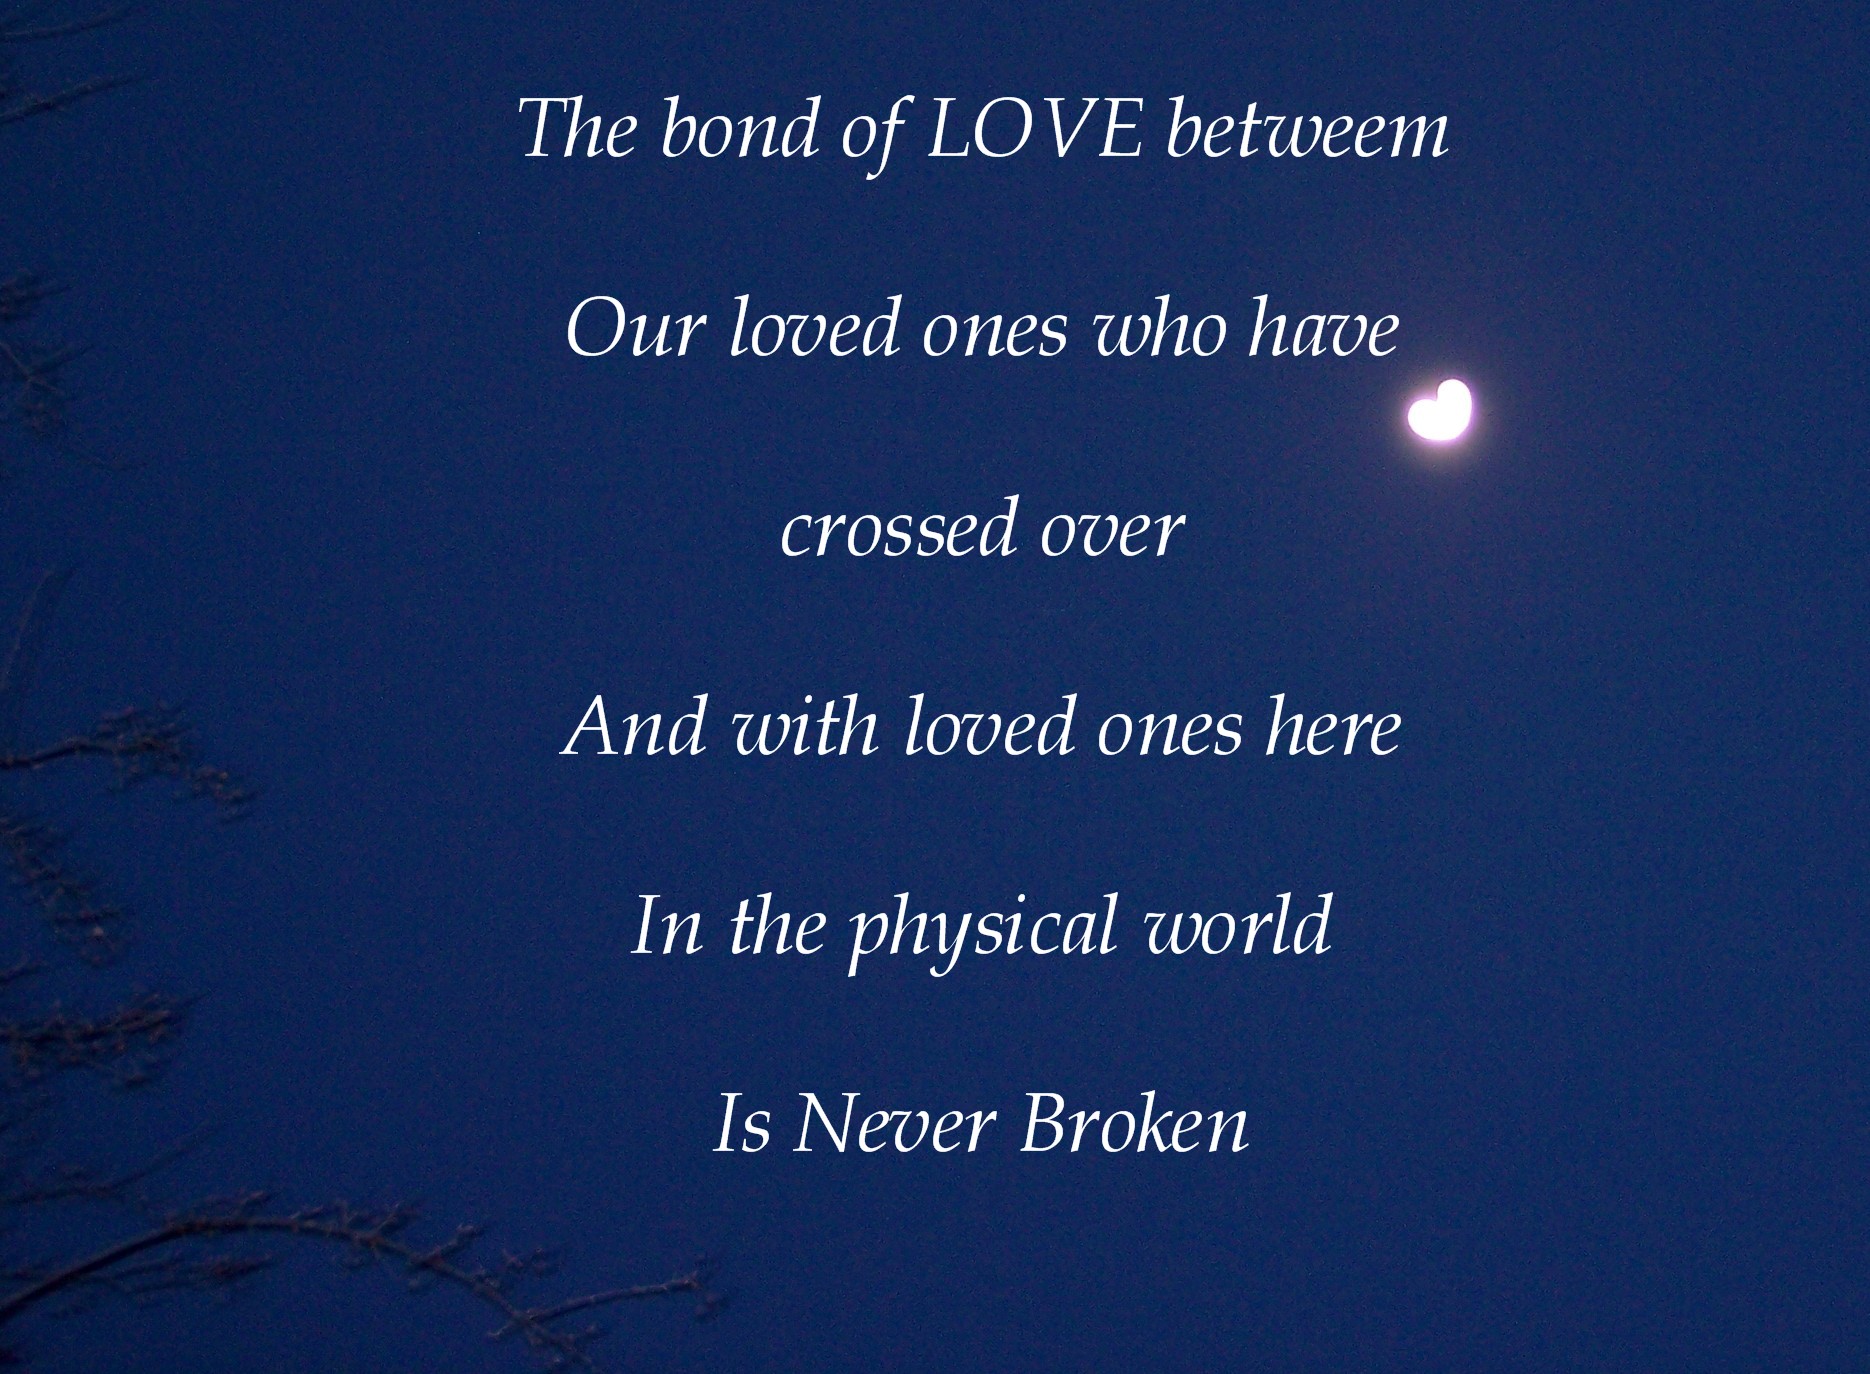 The bond of Love